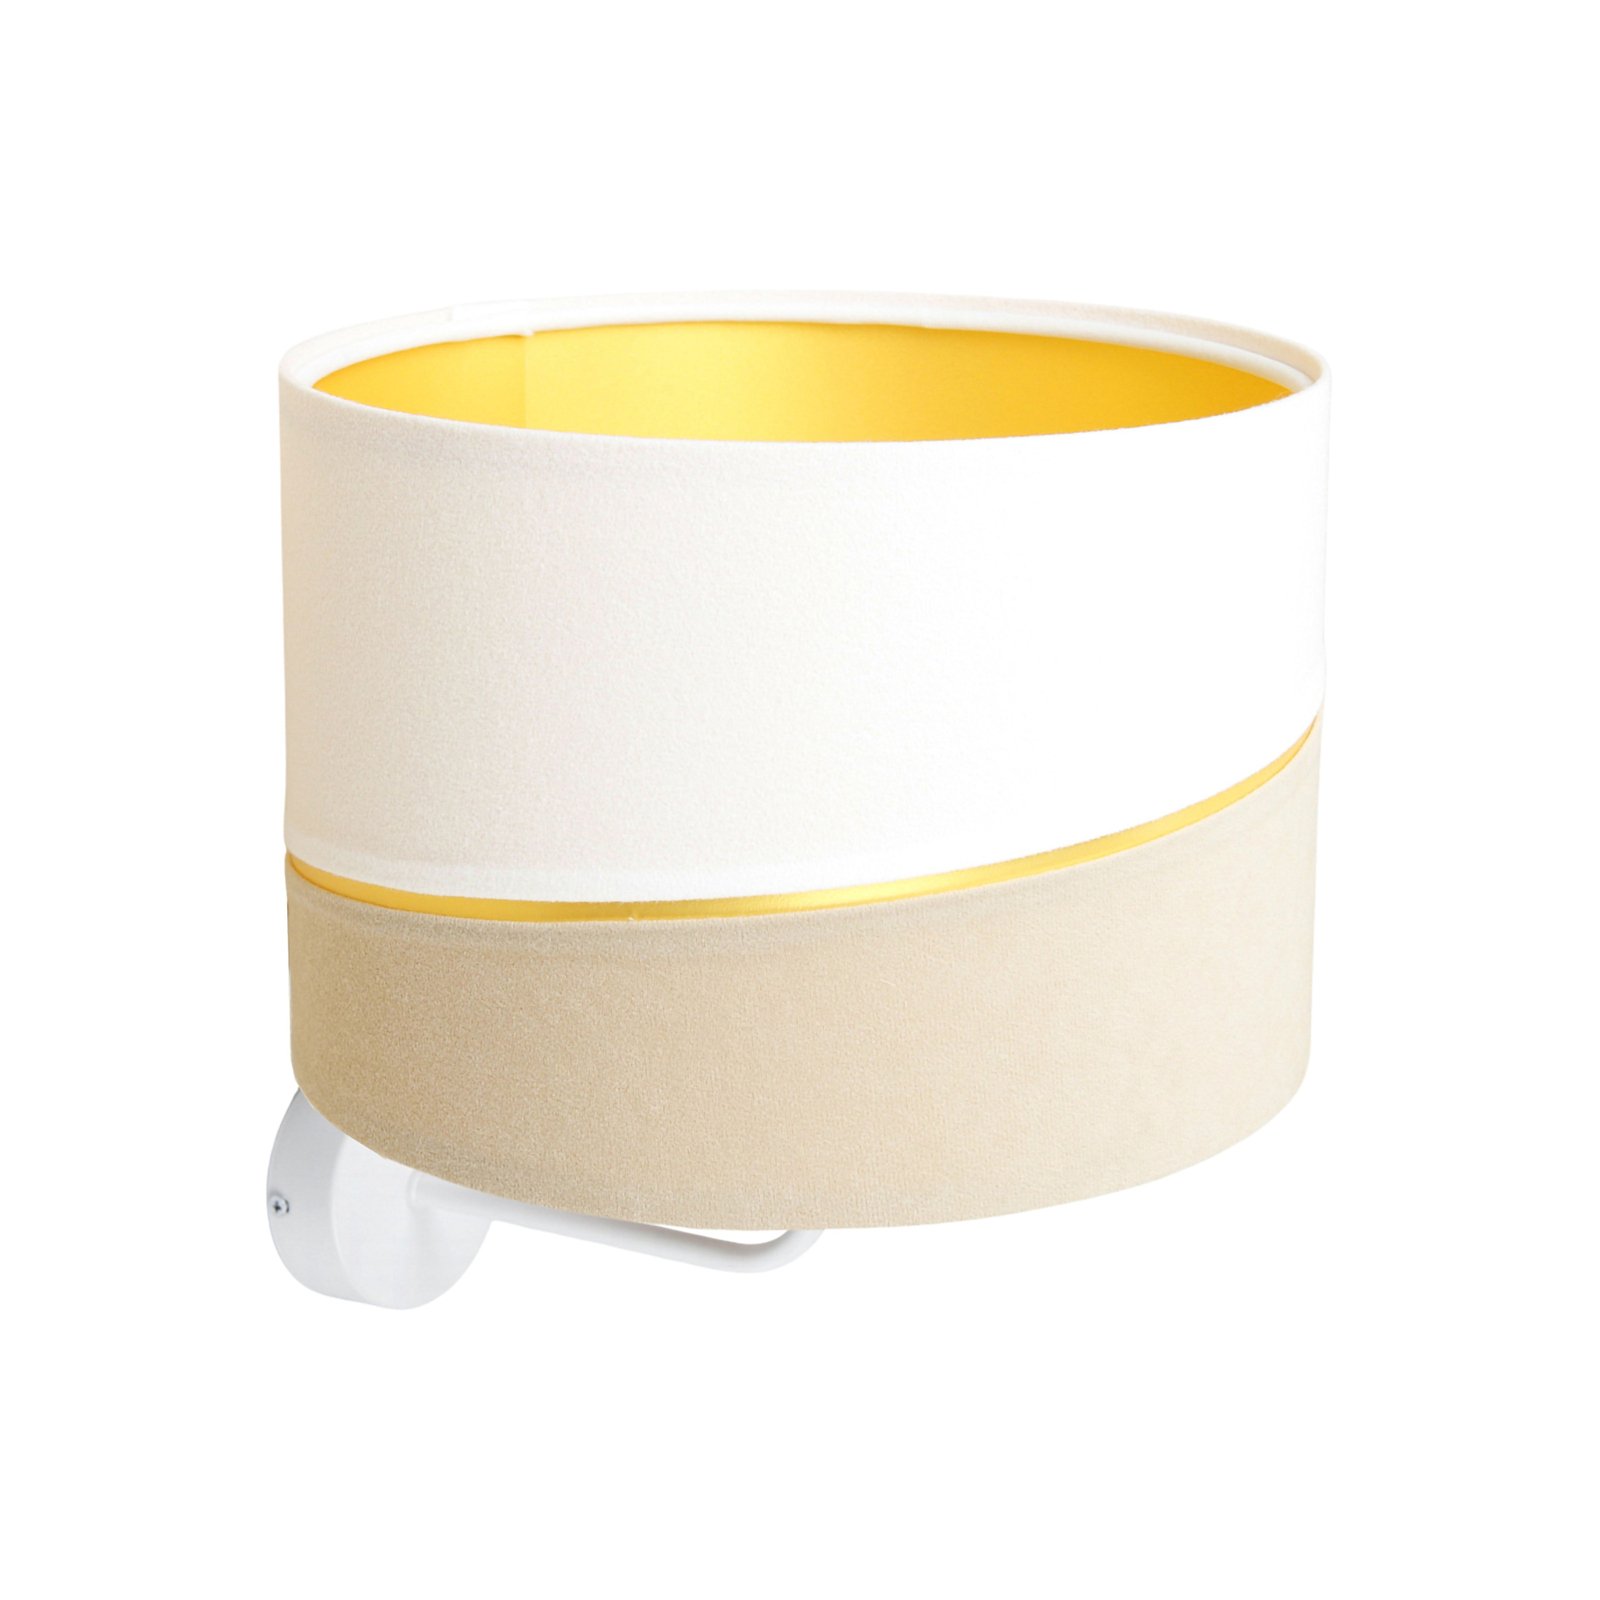 Susan wall light, white/beige/gold